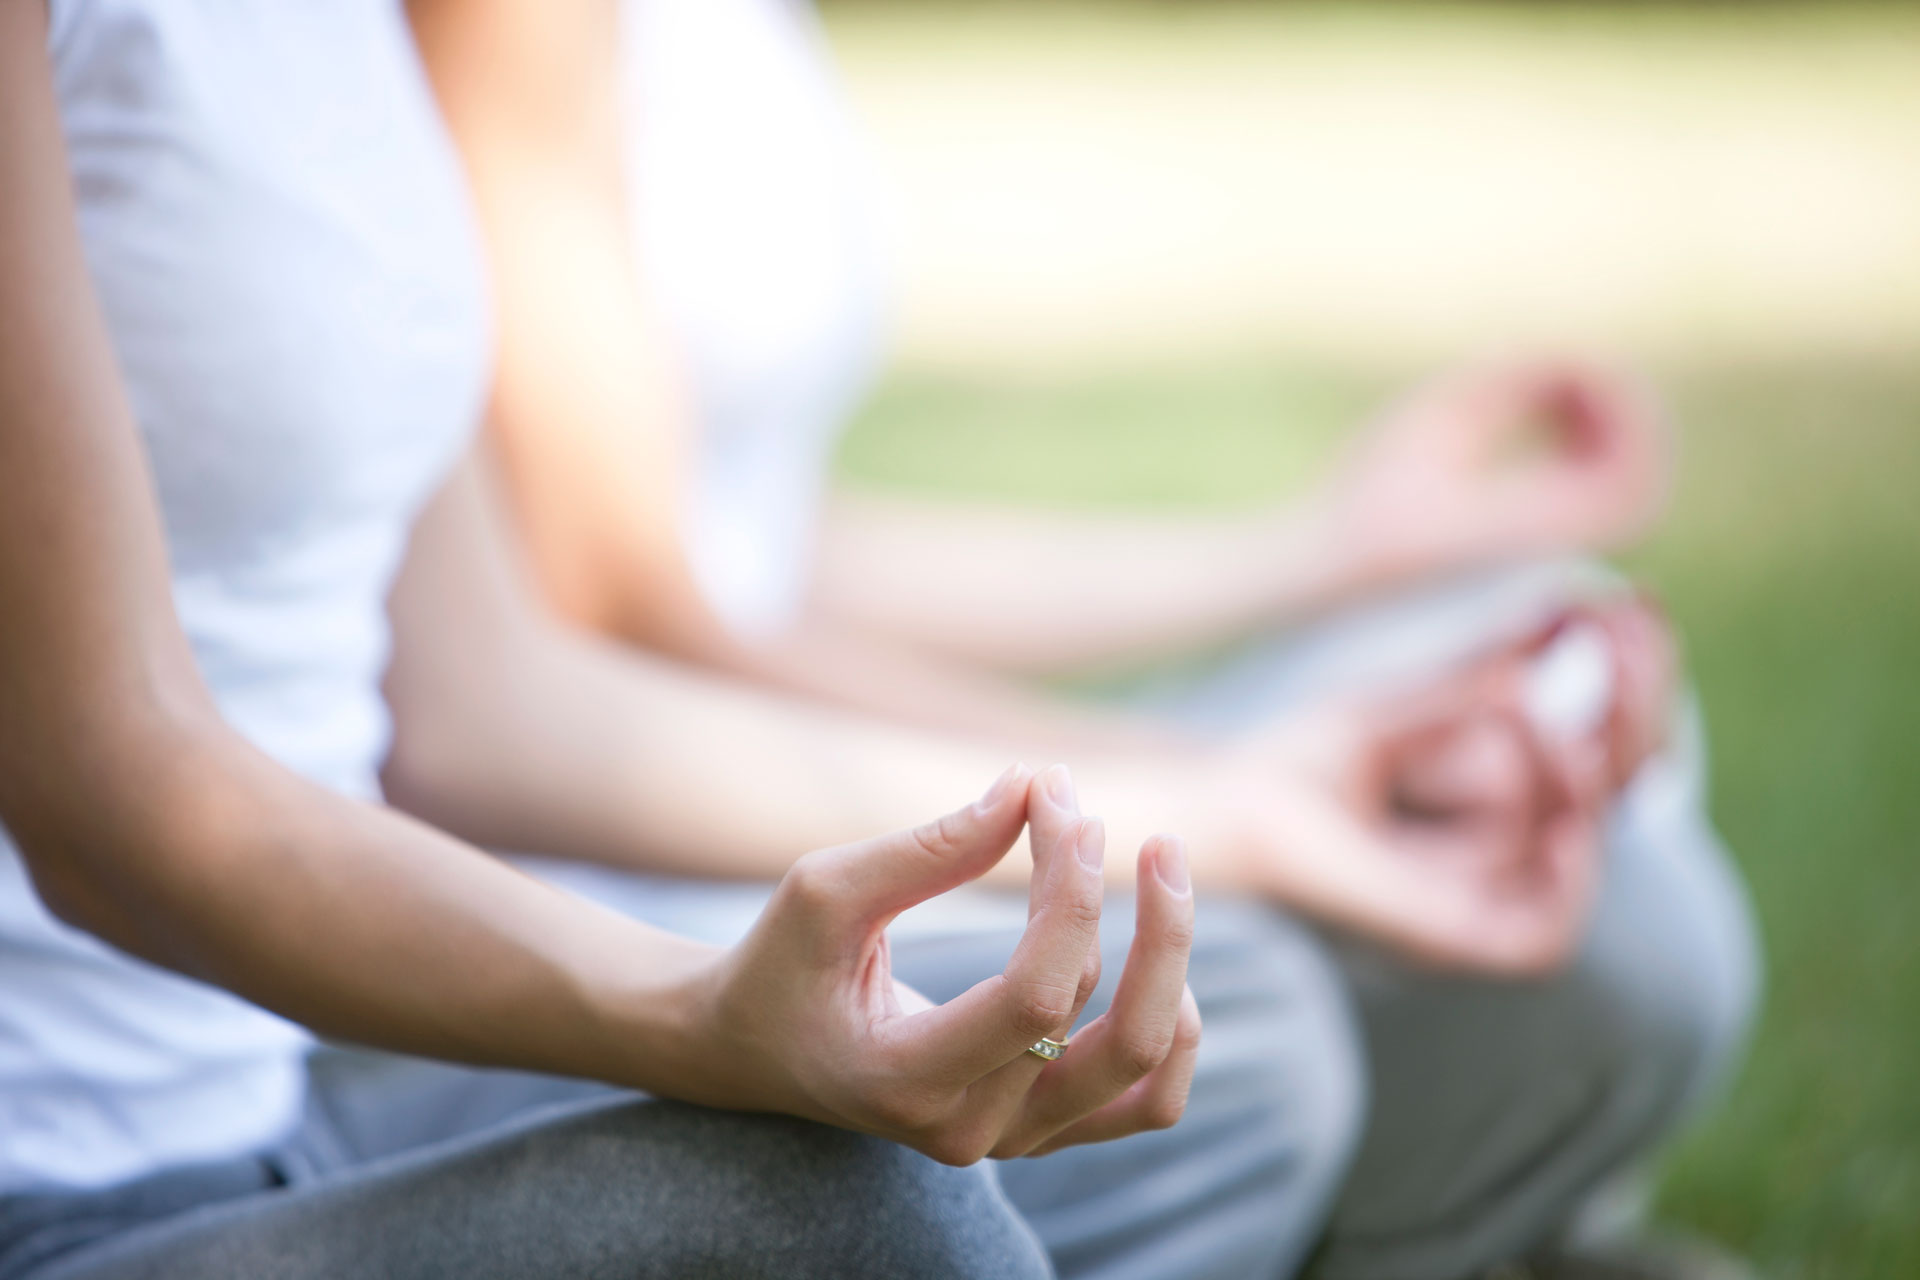 Kundali Yoga to Fight Stress